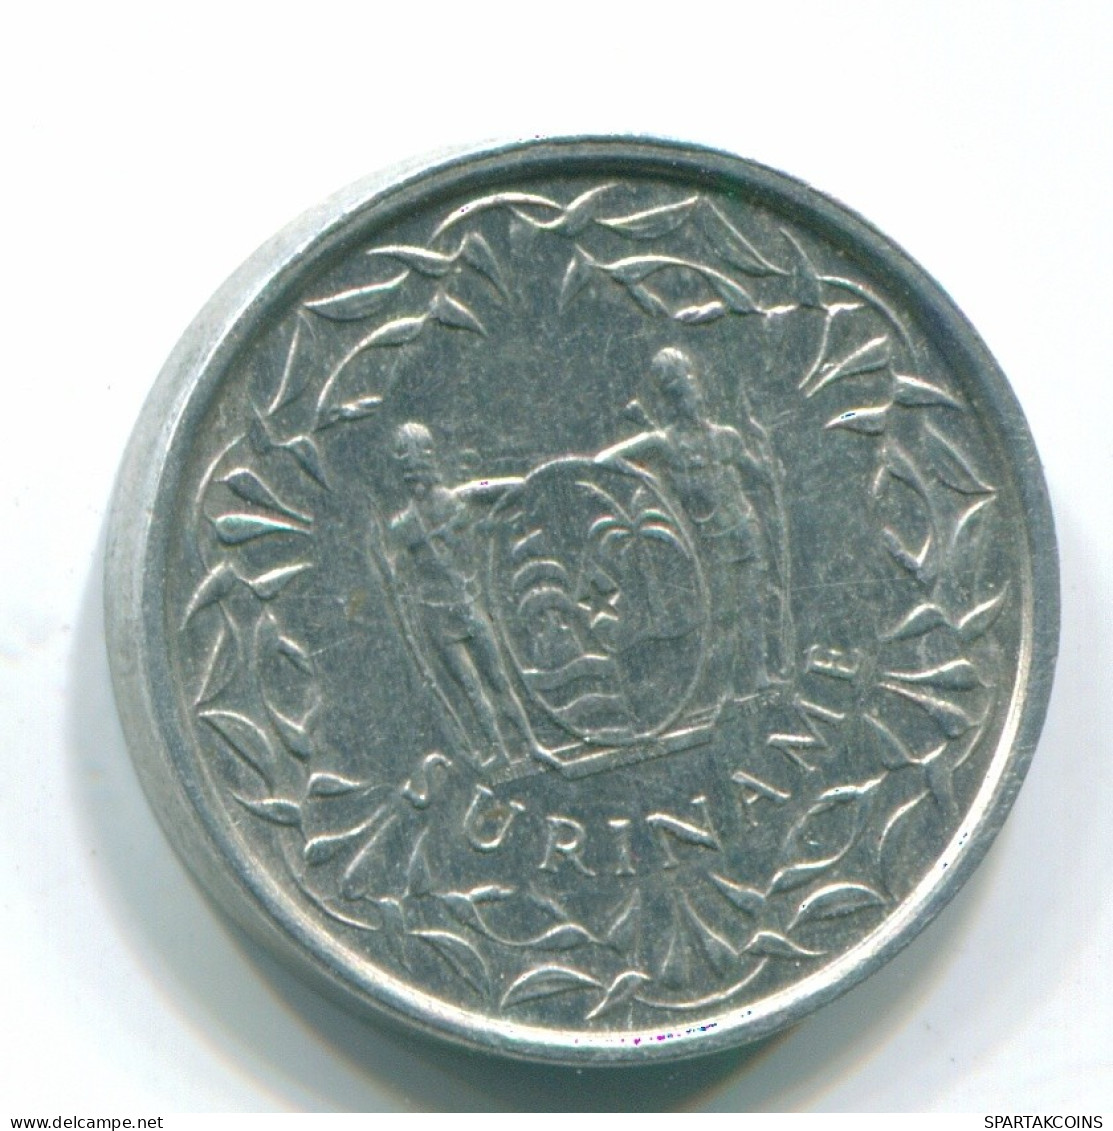 1 CENT 1974 SURINAME Netherlands Aluminium Colonial Coin #S11386.U.A - Suriname 1975 - ...